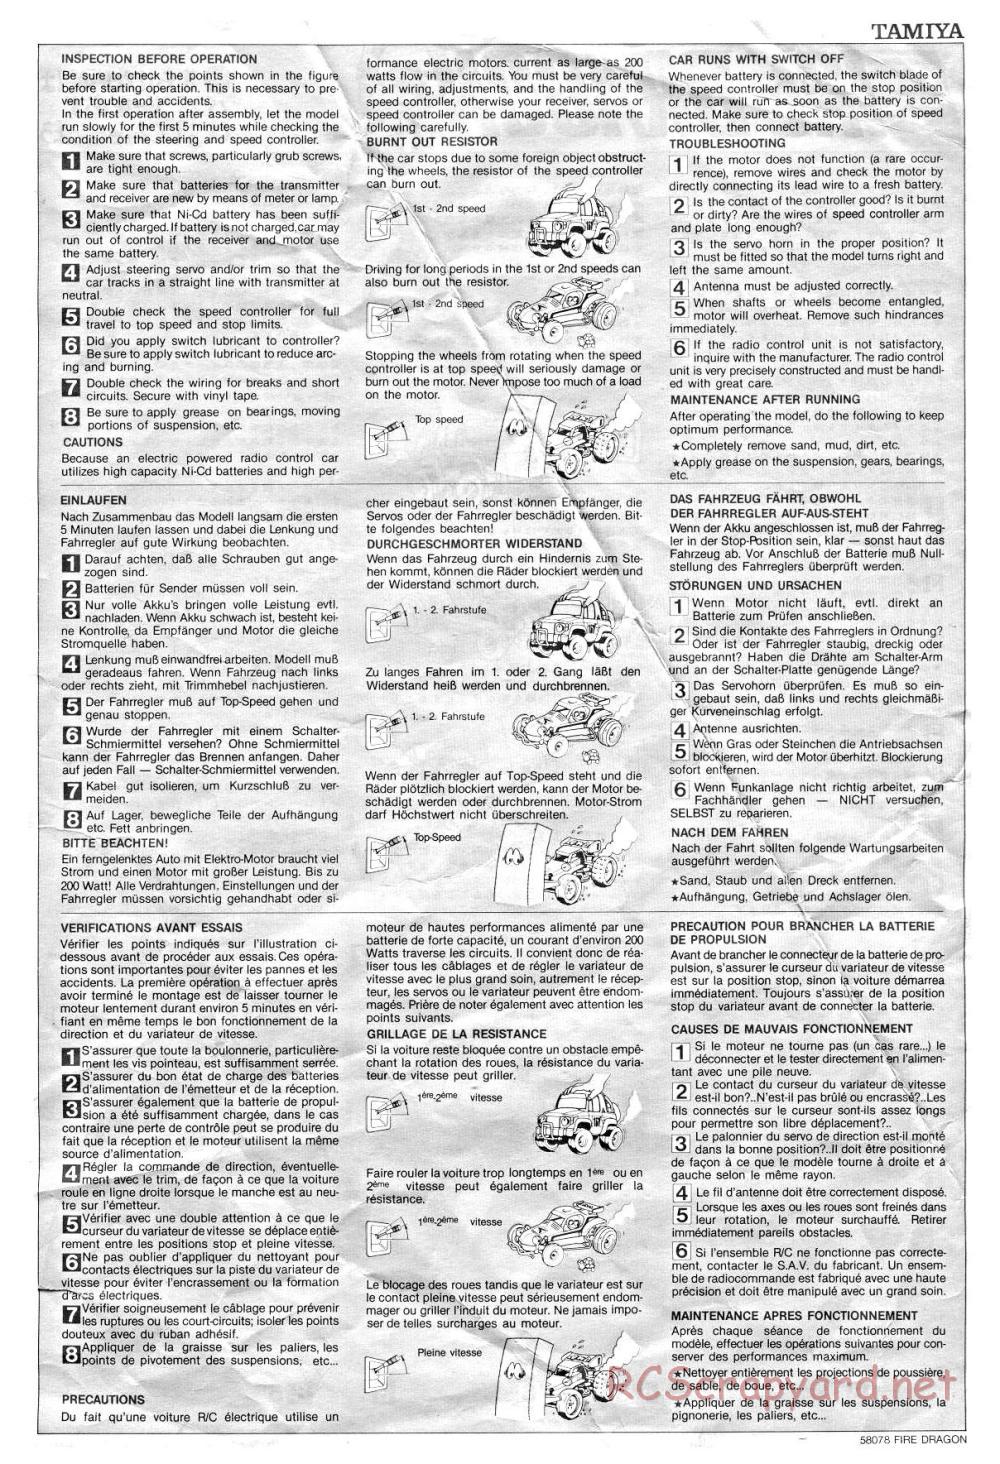 Tamiya - Fire Dragon - 58078 - Manual - Page 26